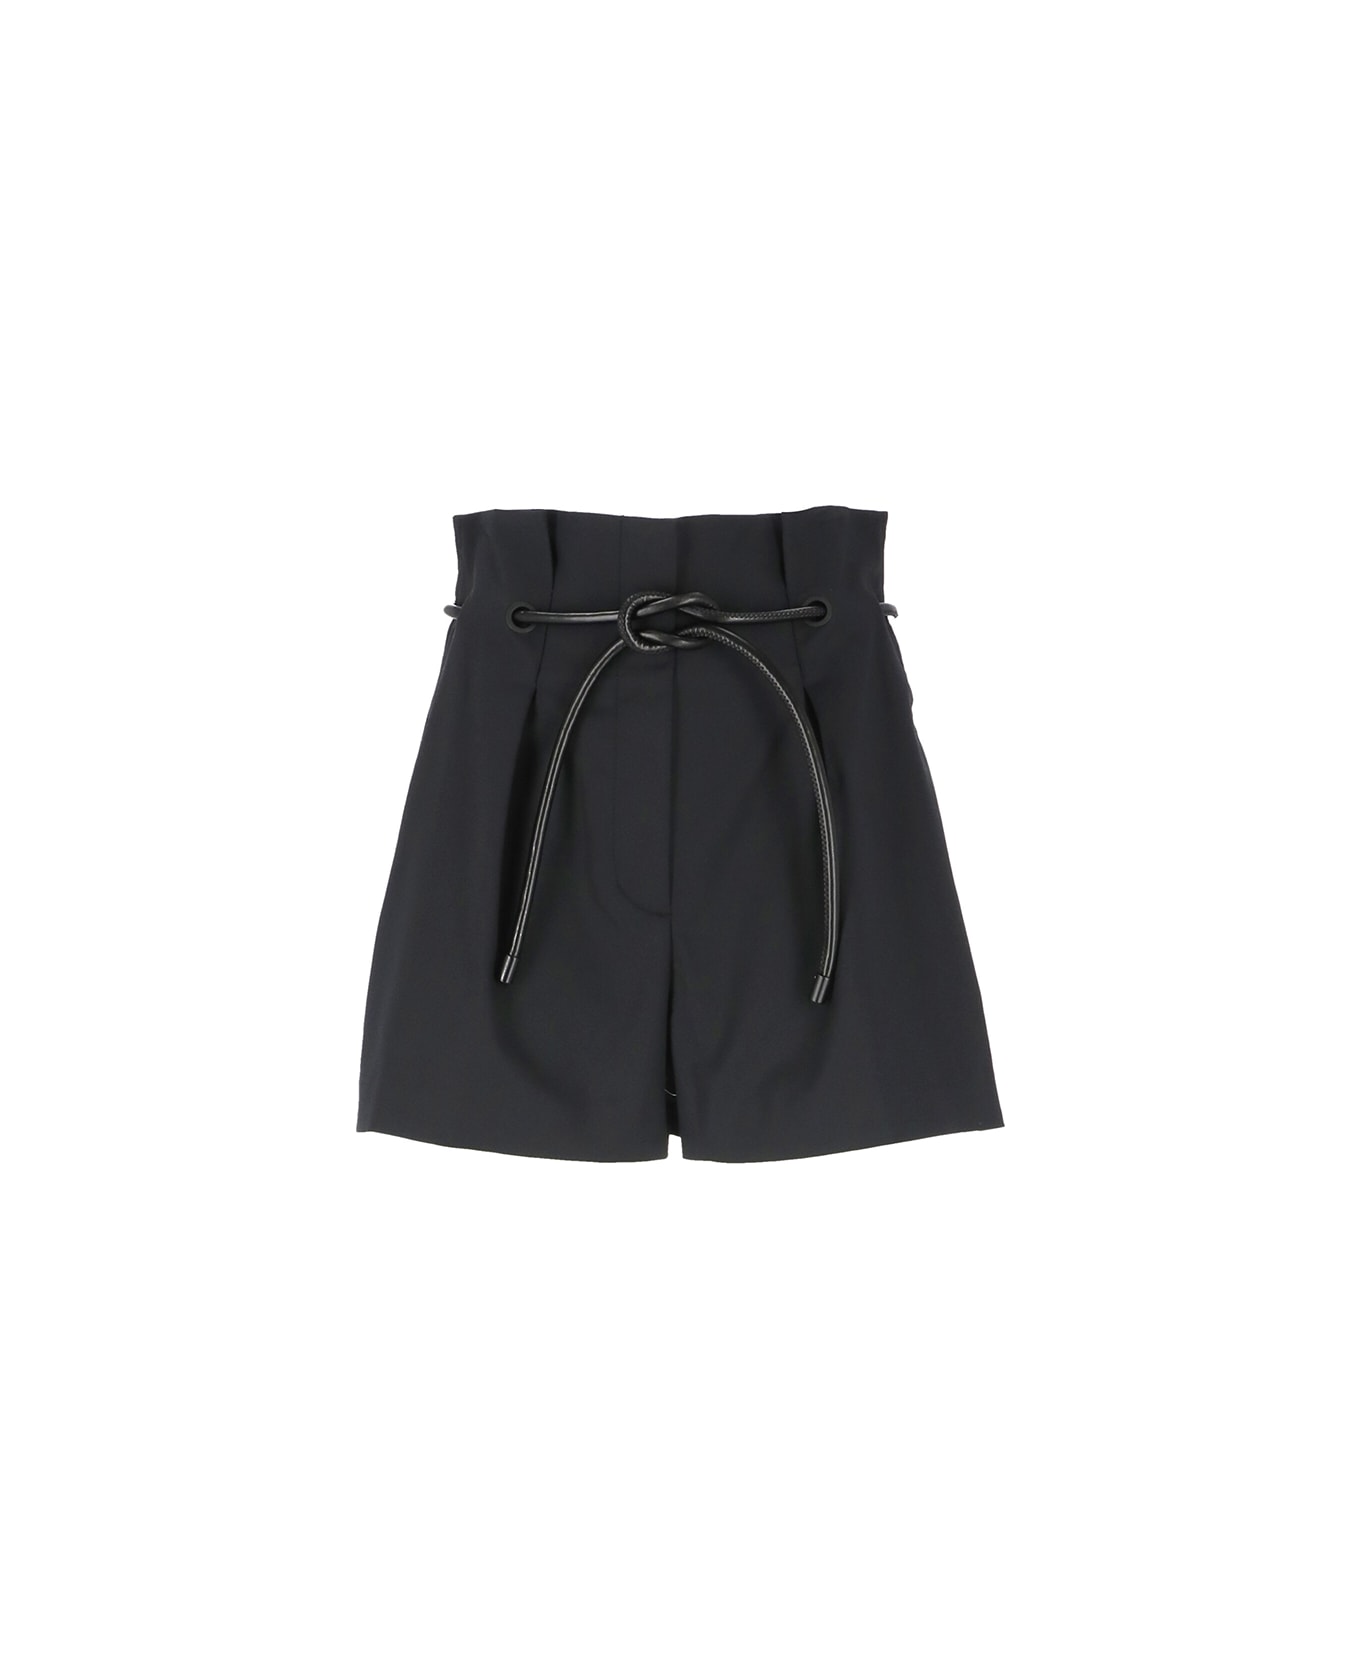 3.1 Phillip Lim Cotton Shorts - Black ショートパンツ